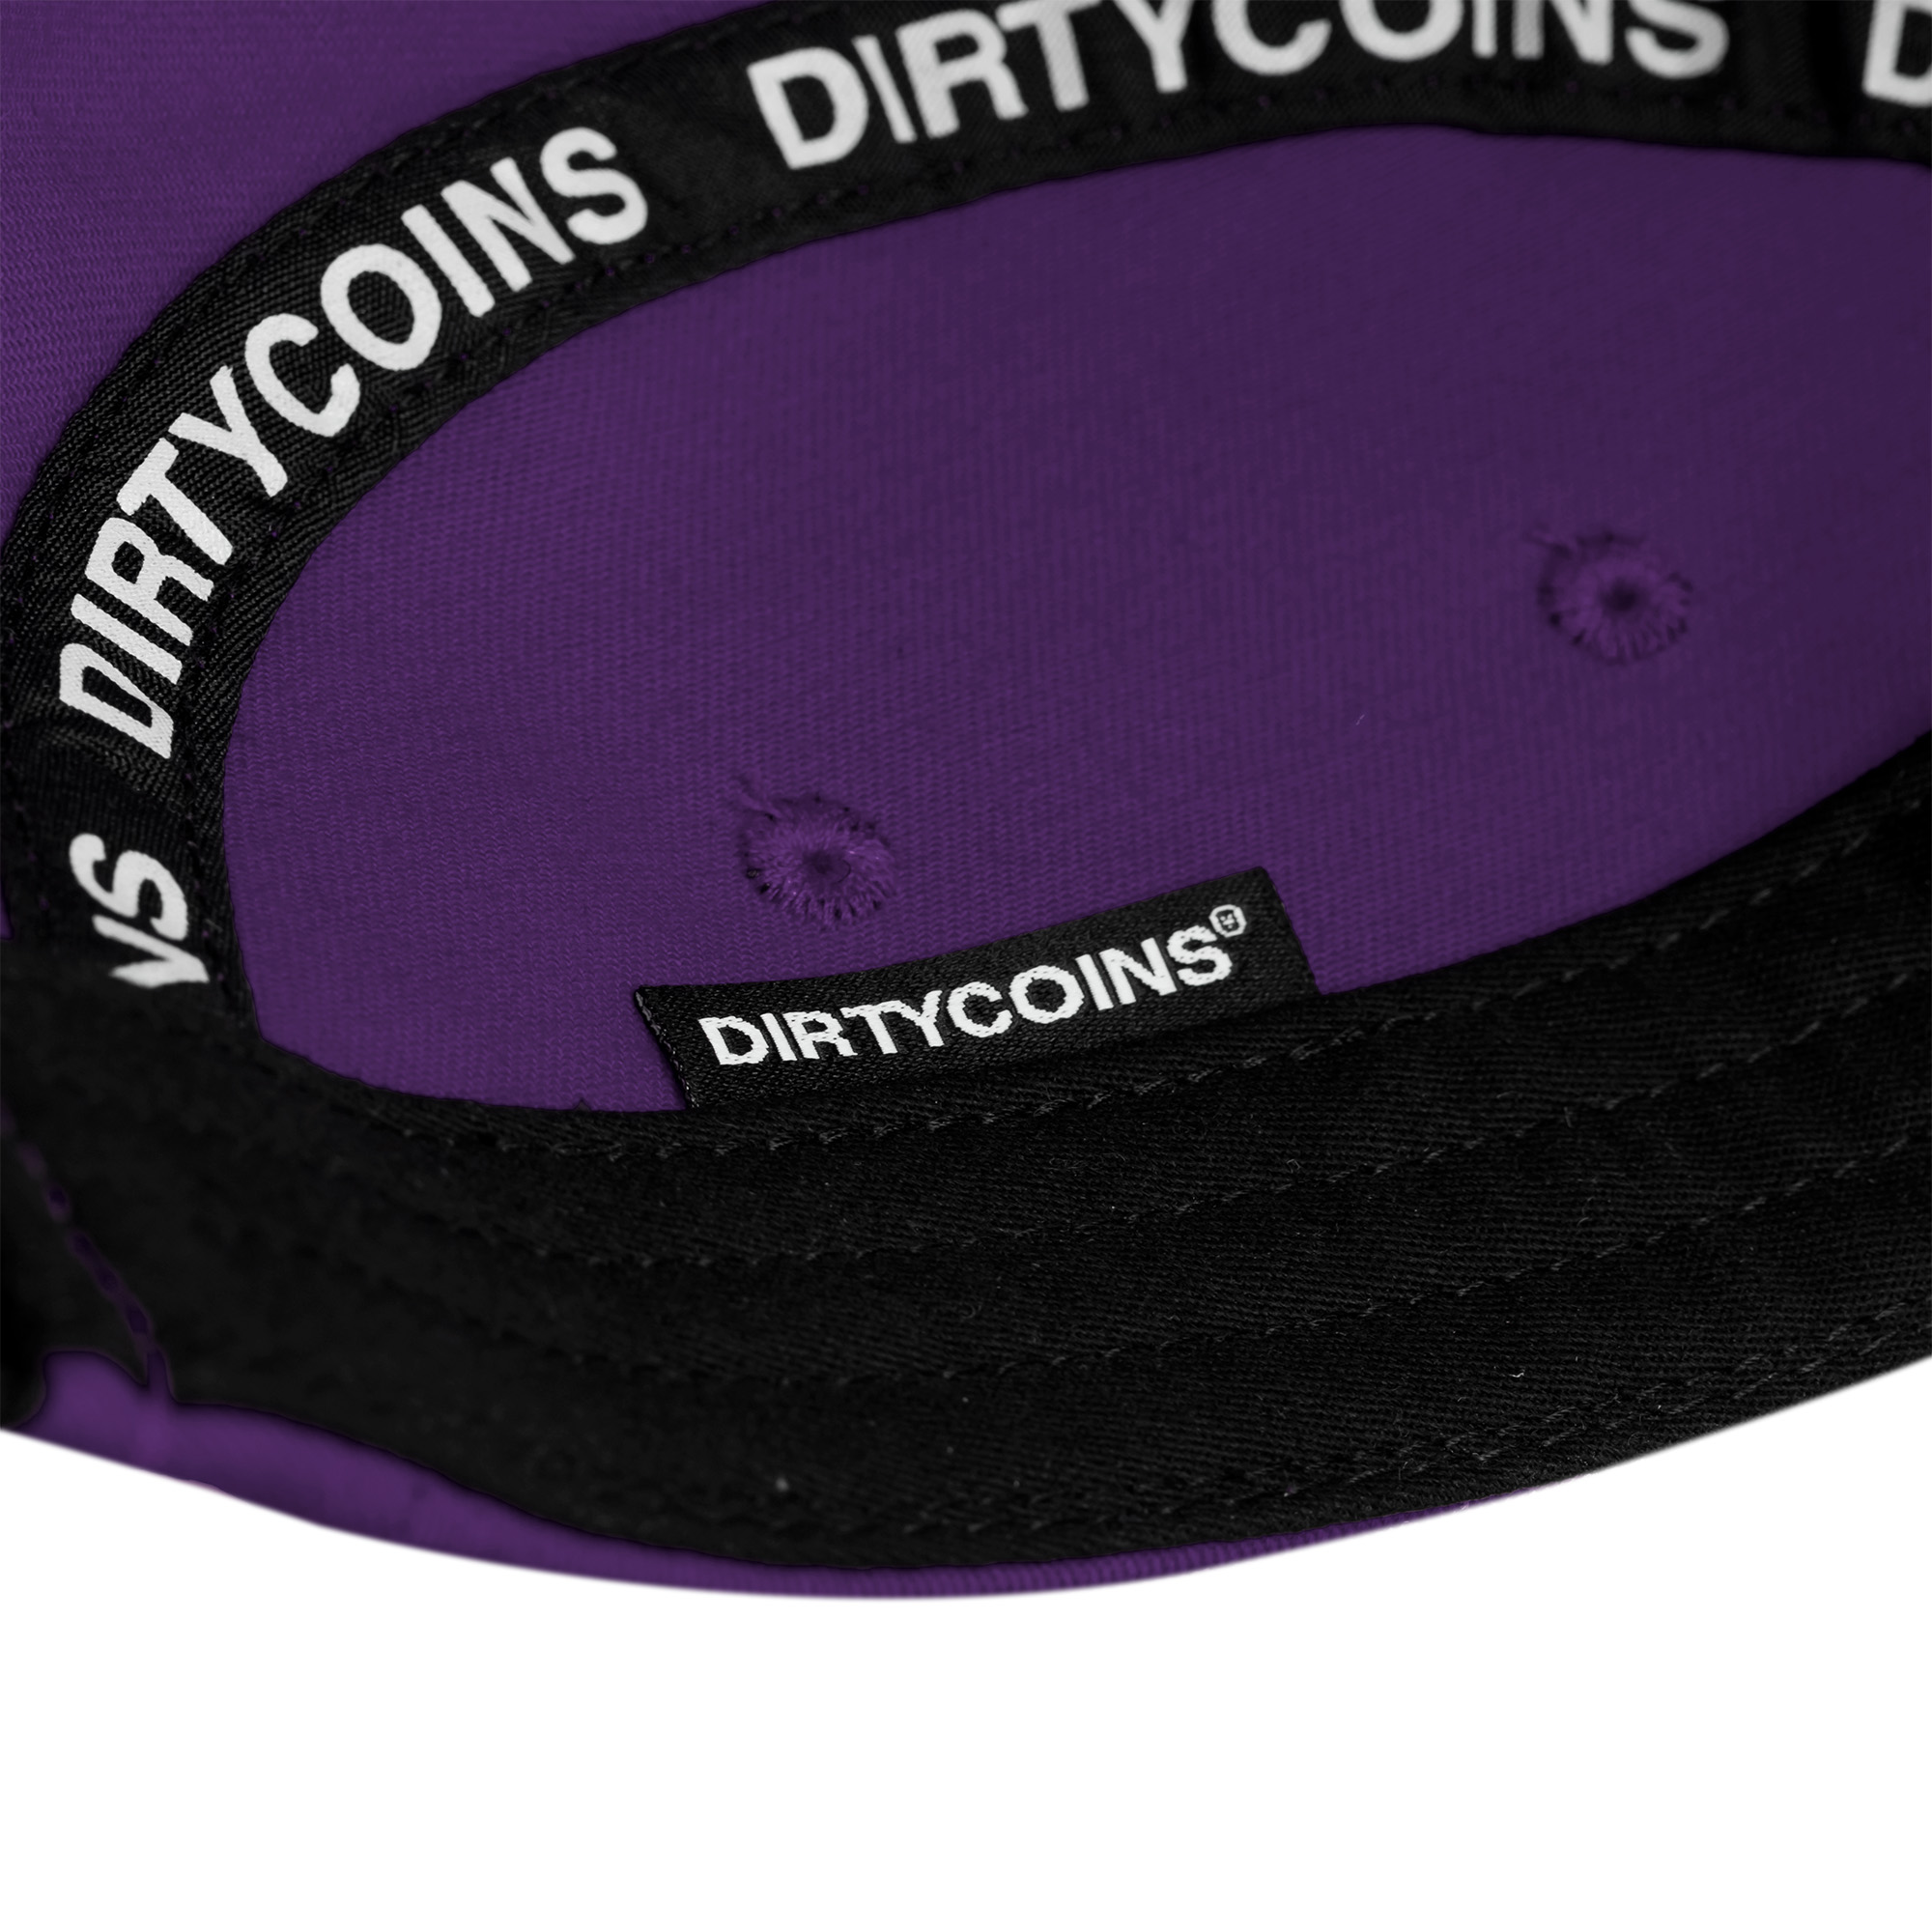 DirtyCoins 5 Panels Cap - Purple